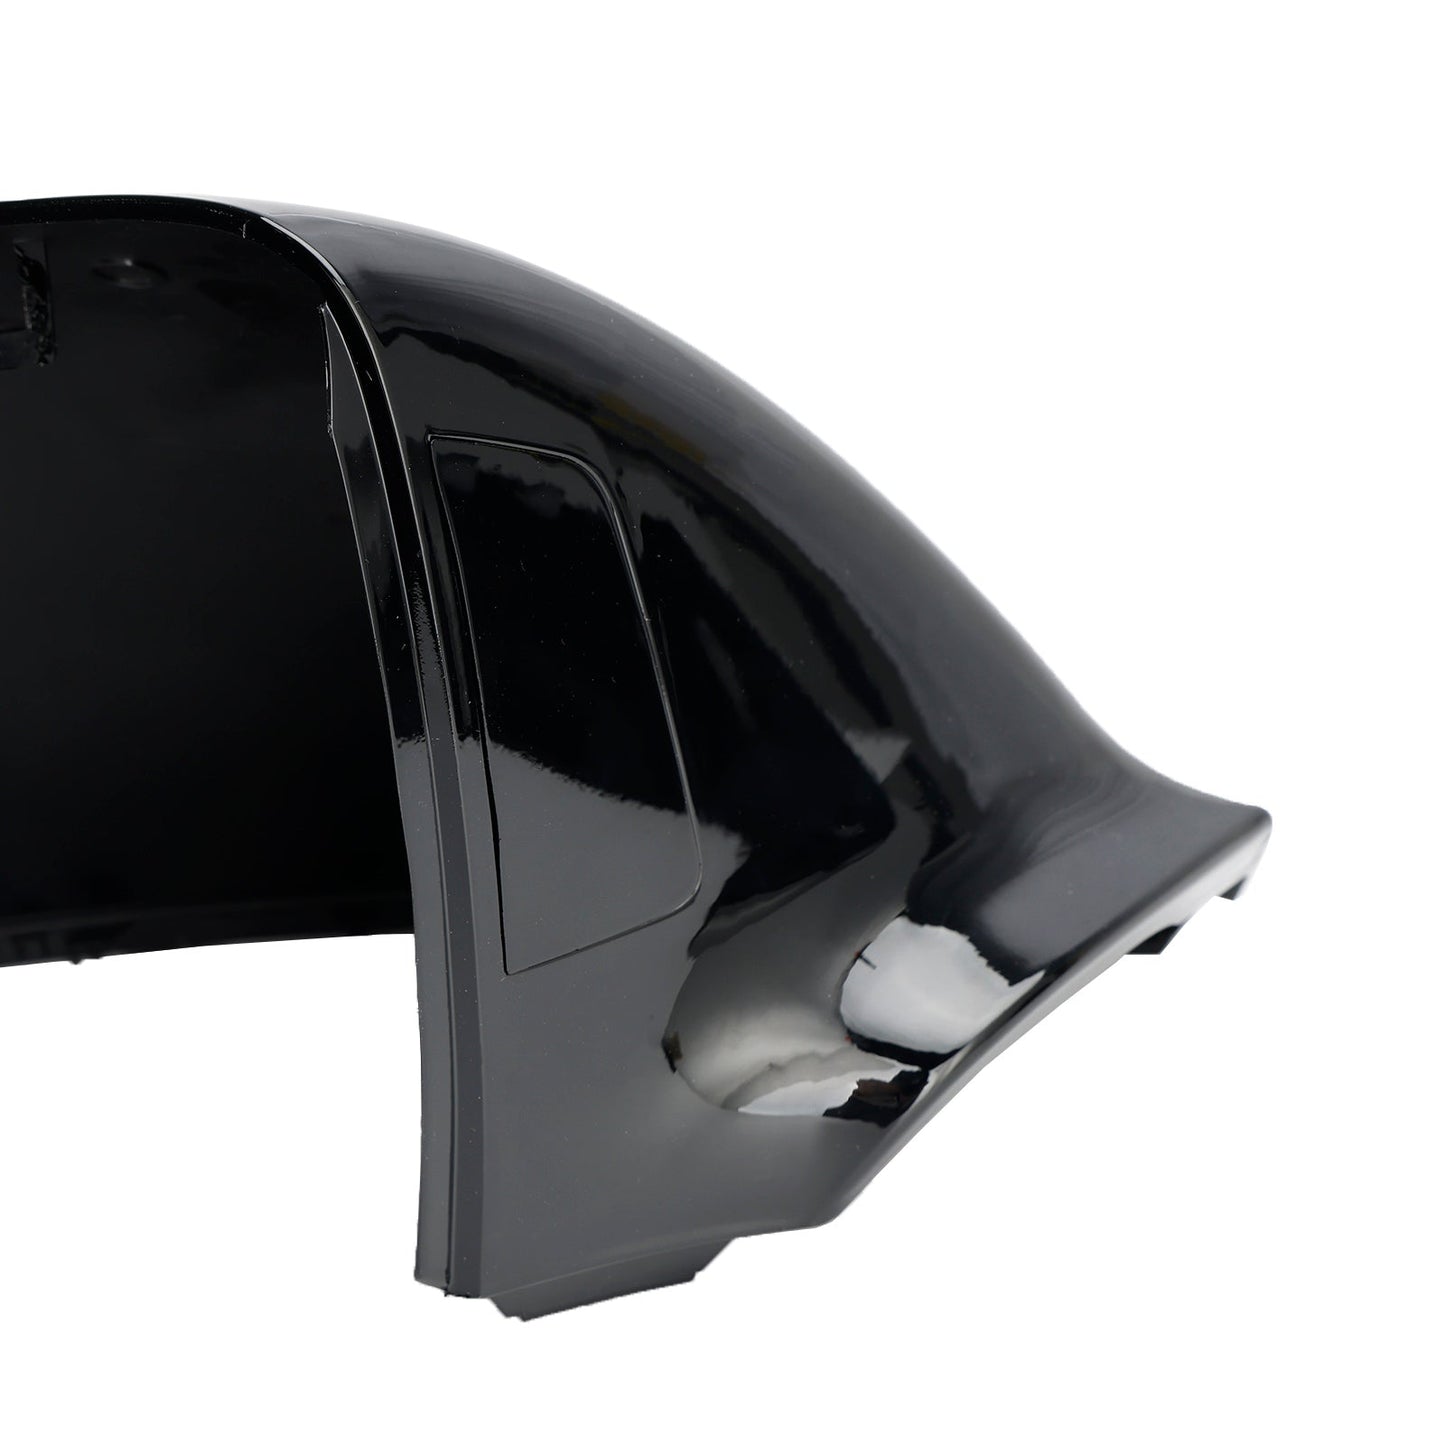 2015-2019 VW T6 Transporter Caravelle Multivan Gloss Black Wing Door Mirror Cover Caps Left+Right